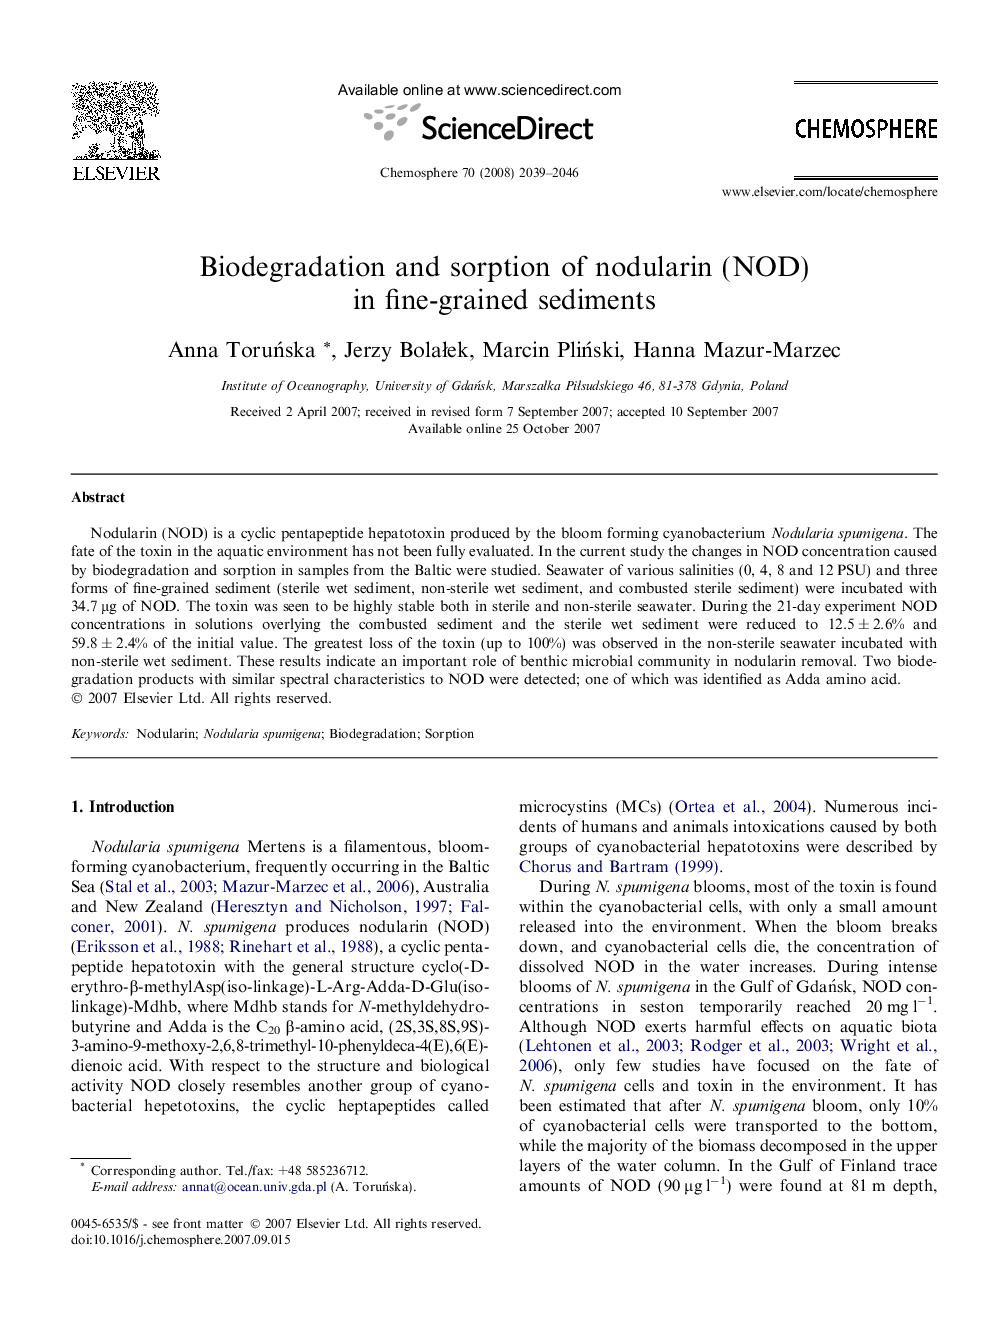 Biodegradation and sorption of nodularin (NOD) in fine-grained sediments